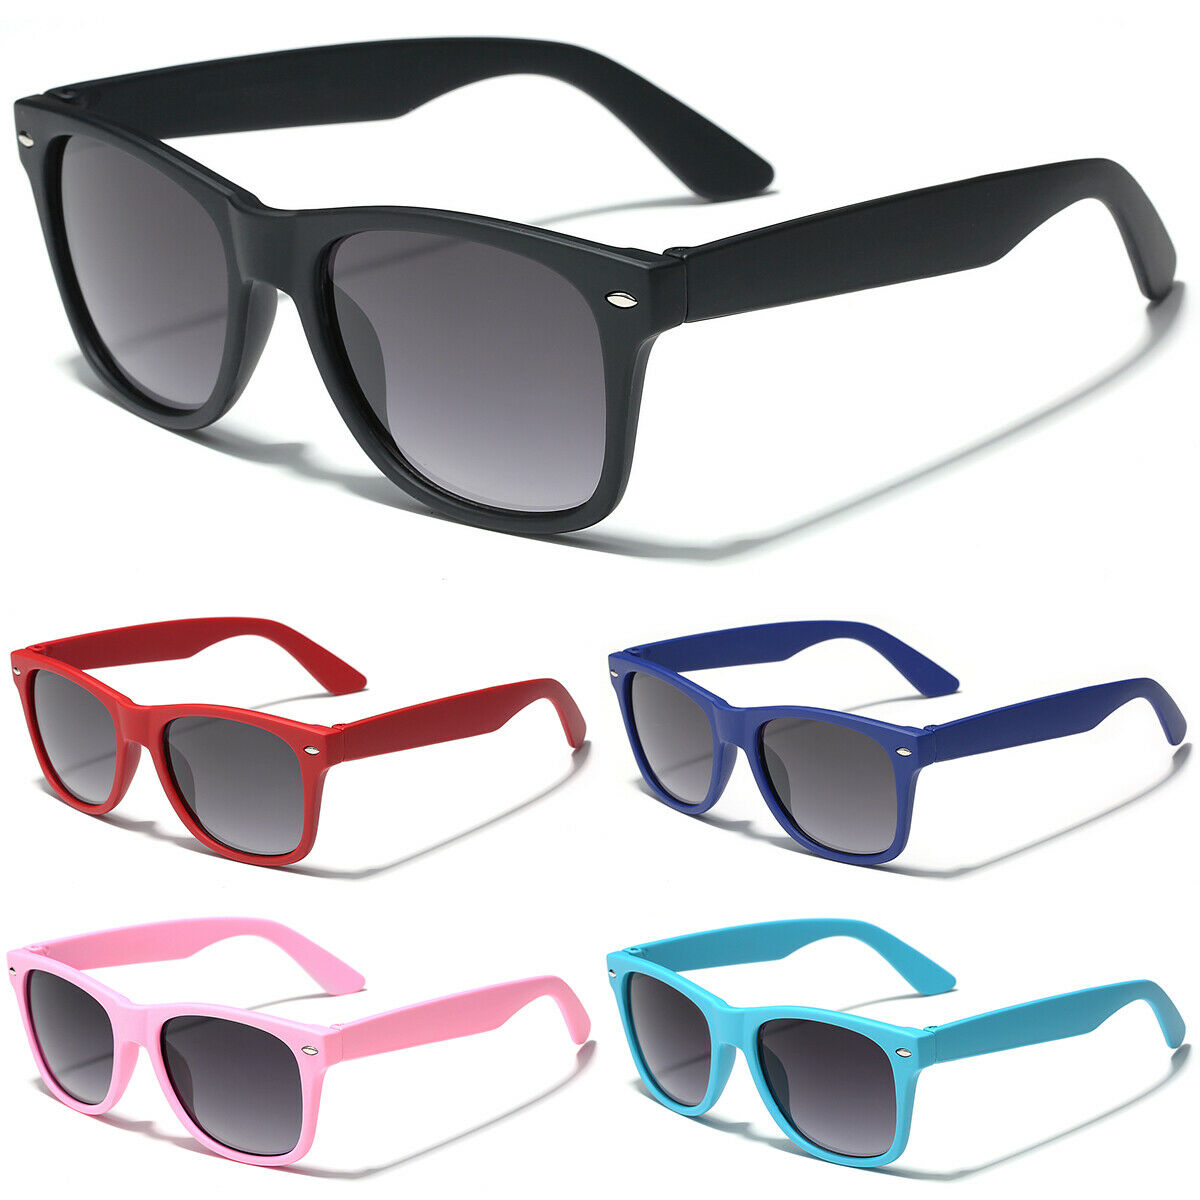 Kids Retro Rewind Sunglasses Boys Girls Rubberized Soft Frame Glasses Age 3-12